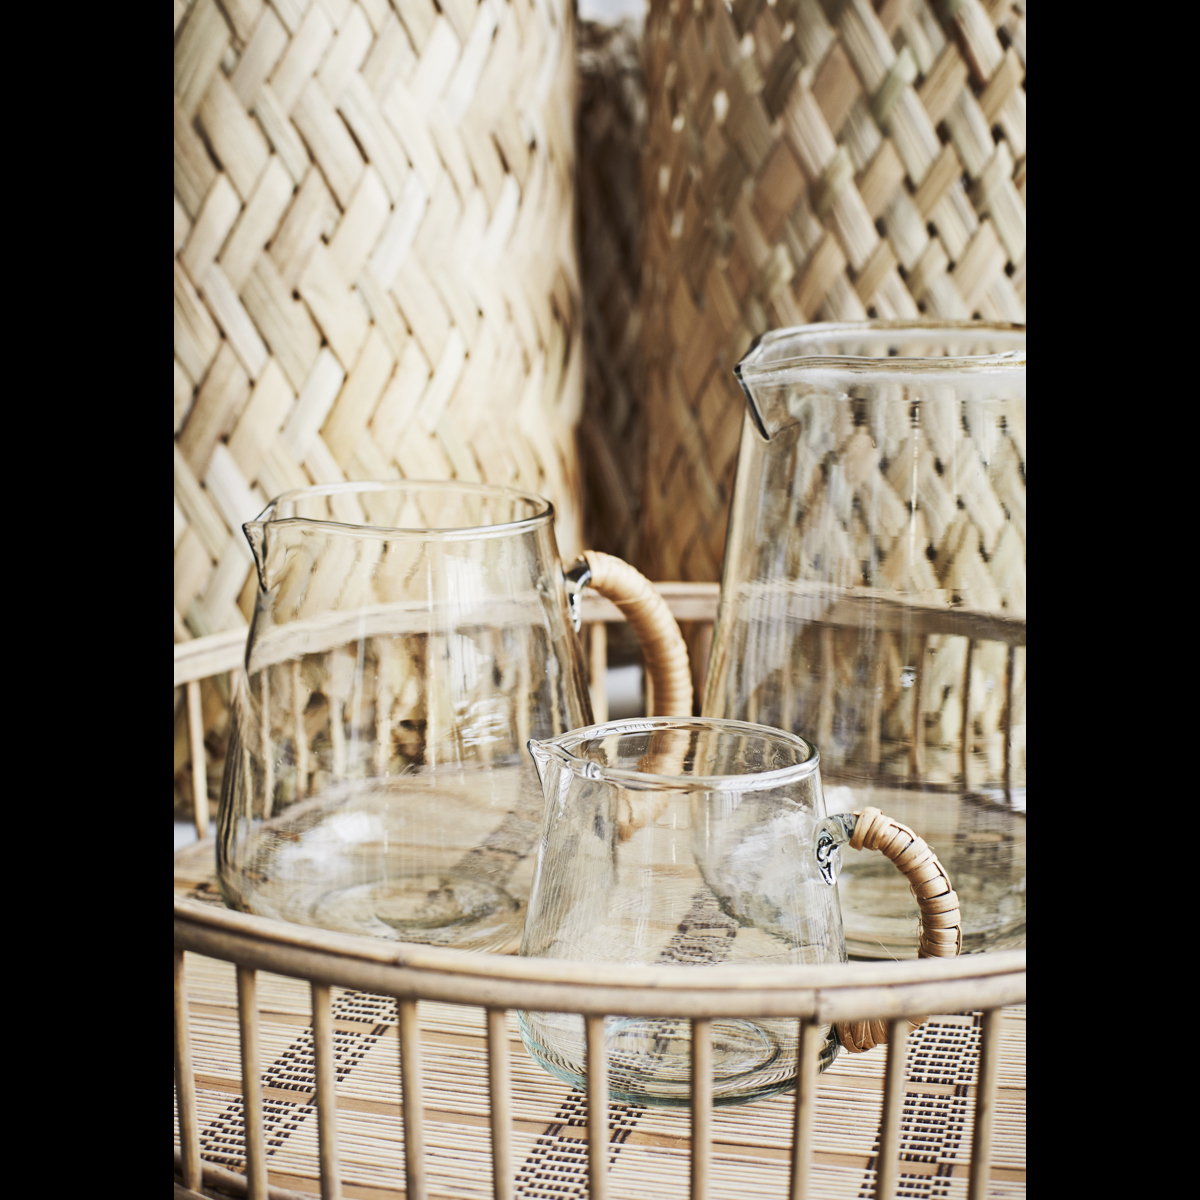 Glass jug w/ bamboo handle